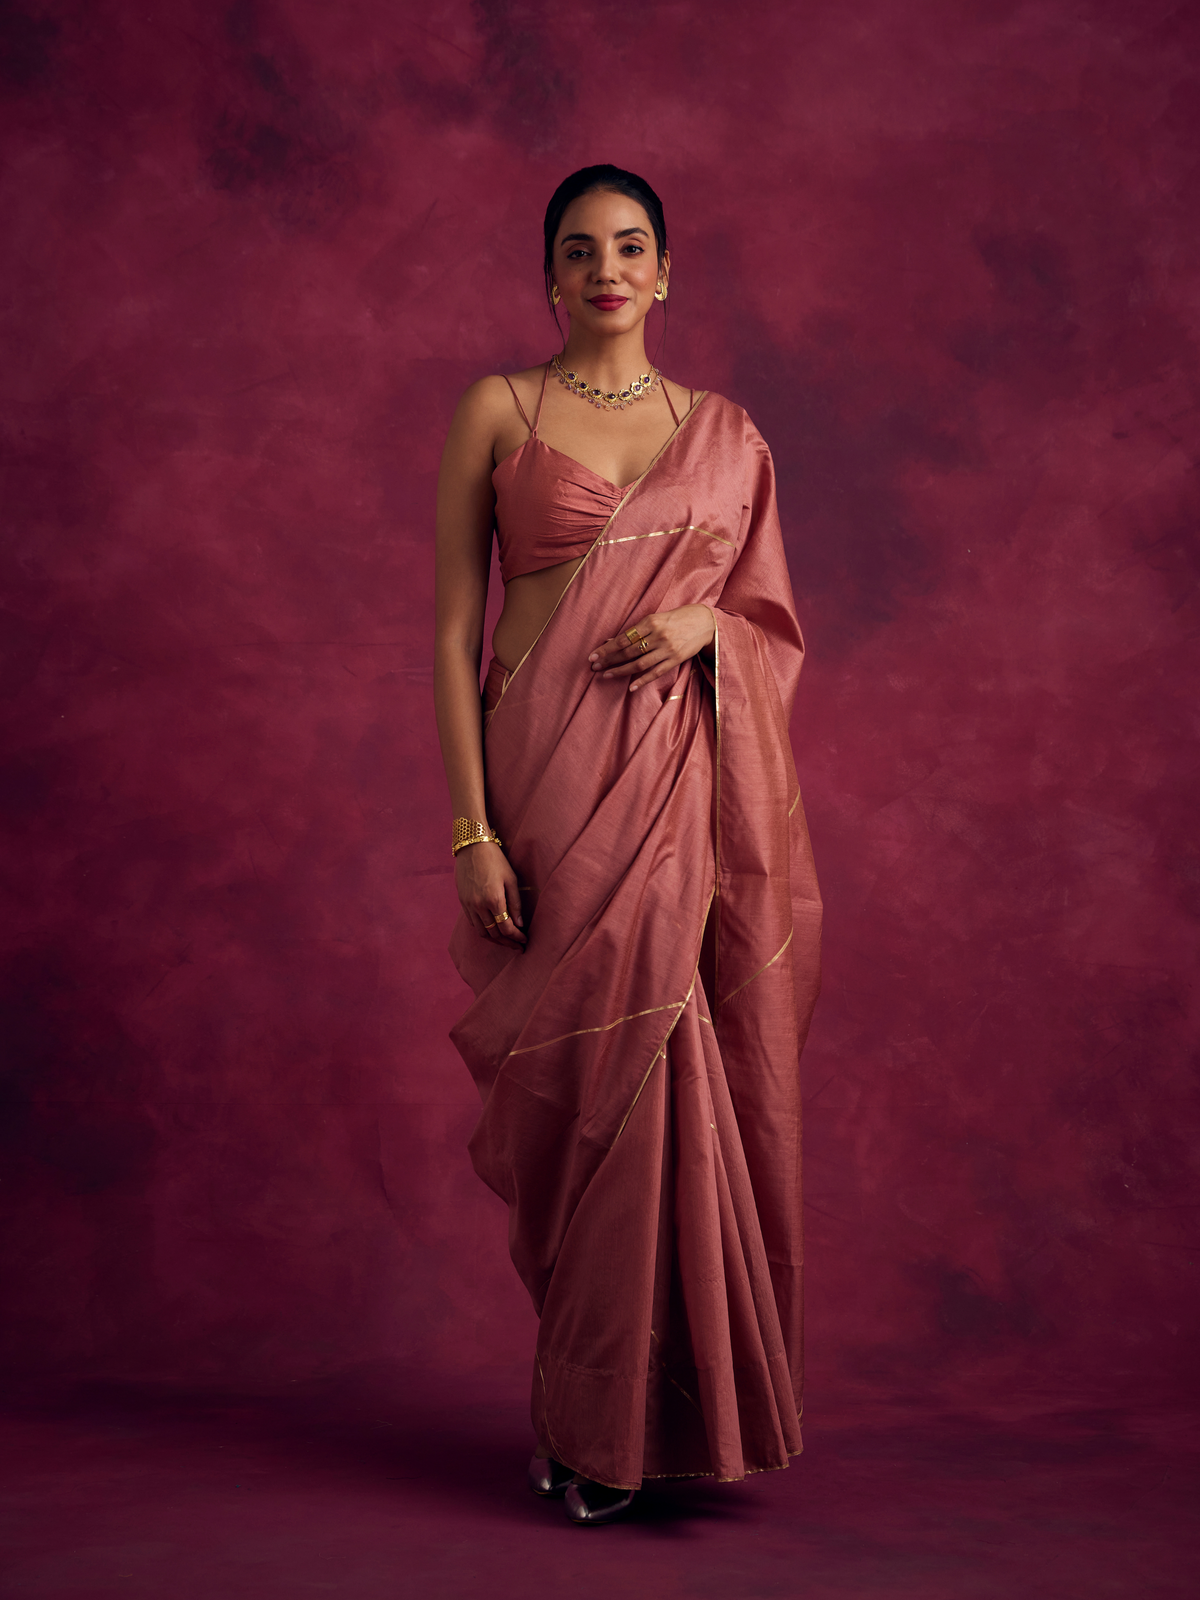 Semi Chinia Silk saree with gota patti highlights-Rose Brown